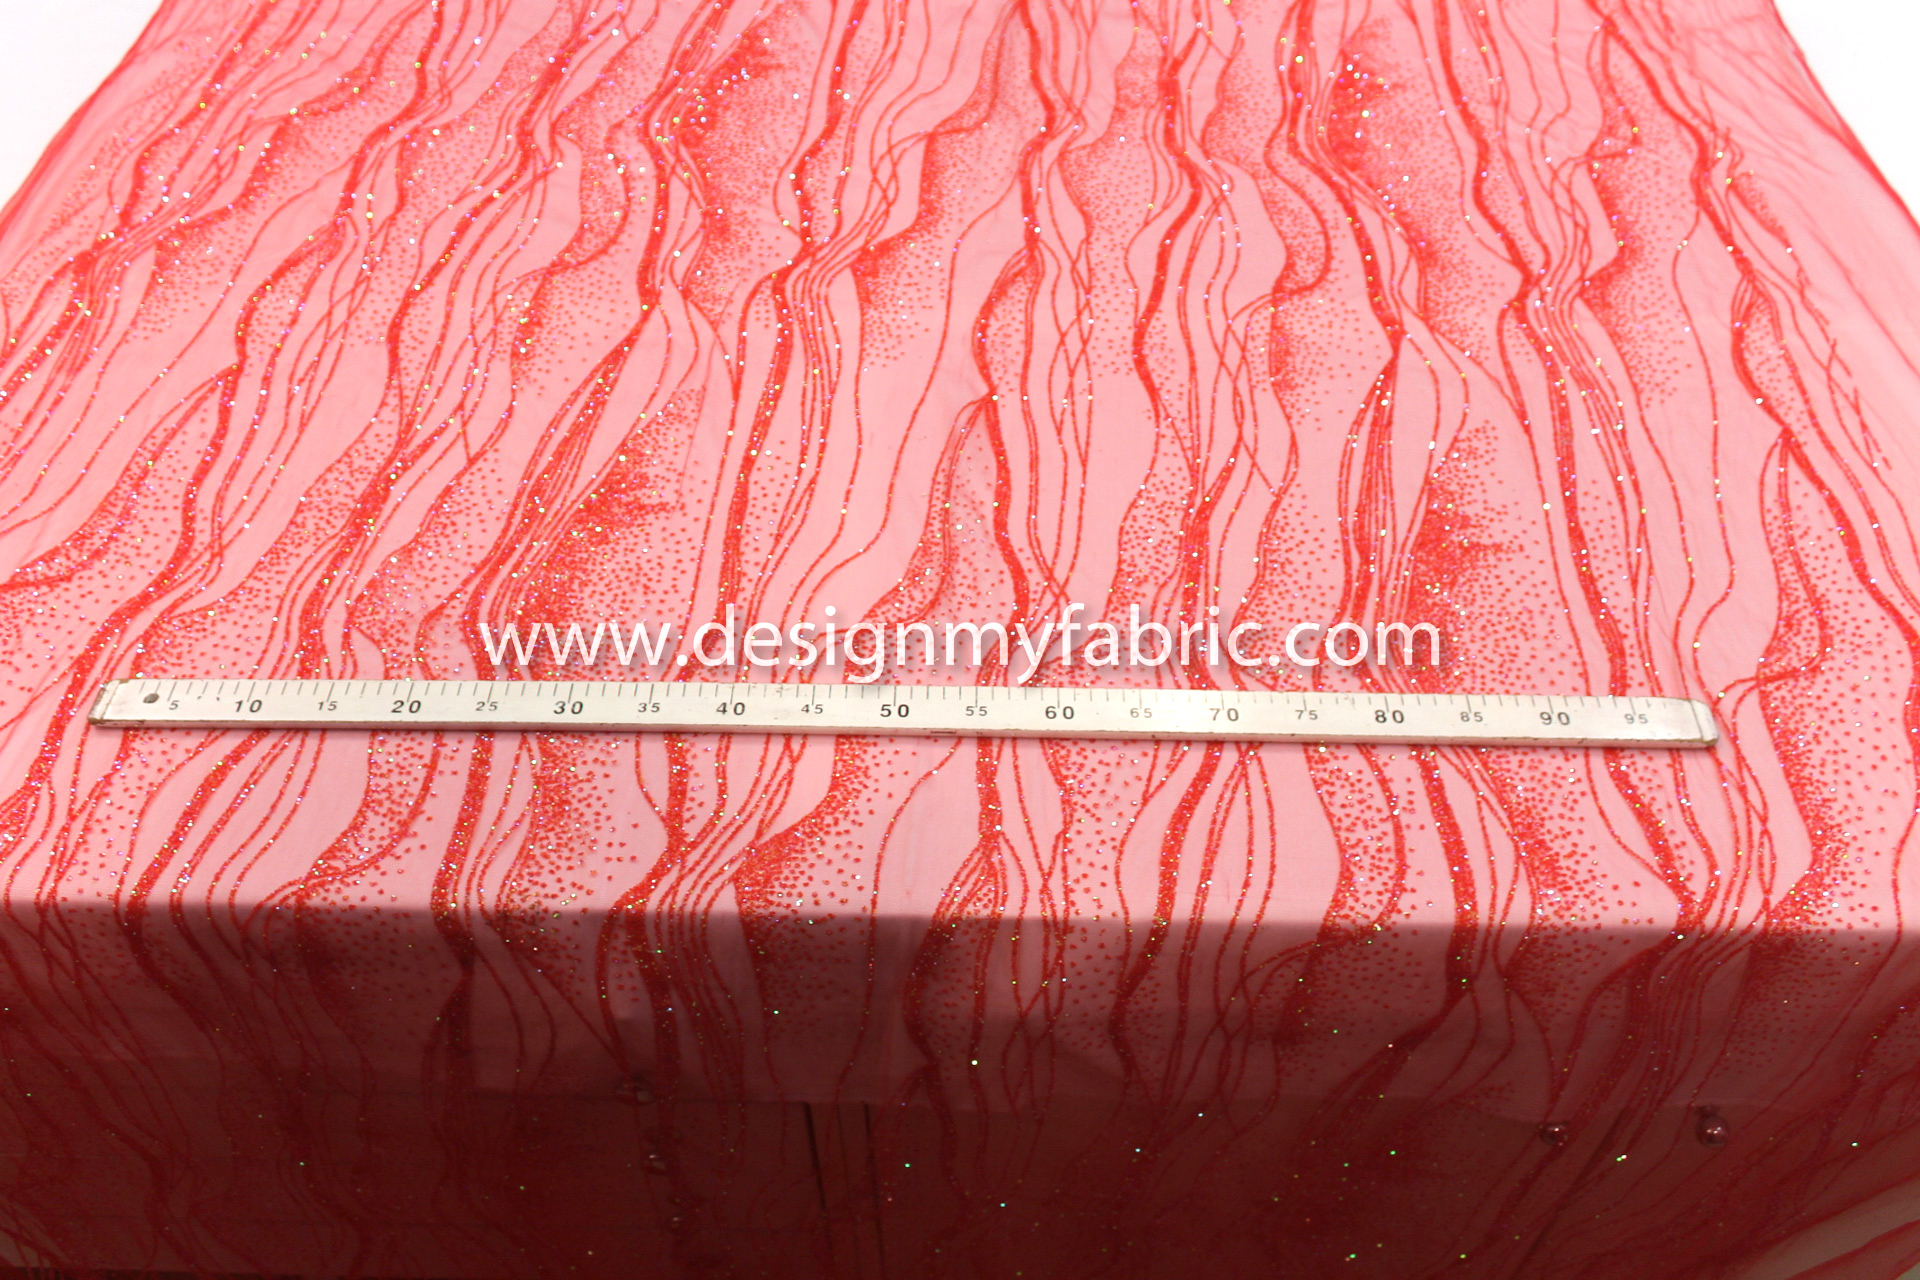 Red glitter net fabric #99576 - Design My Fabric